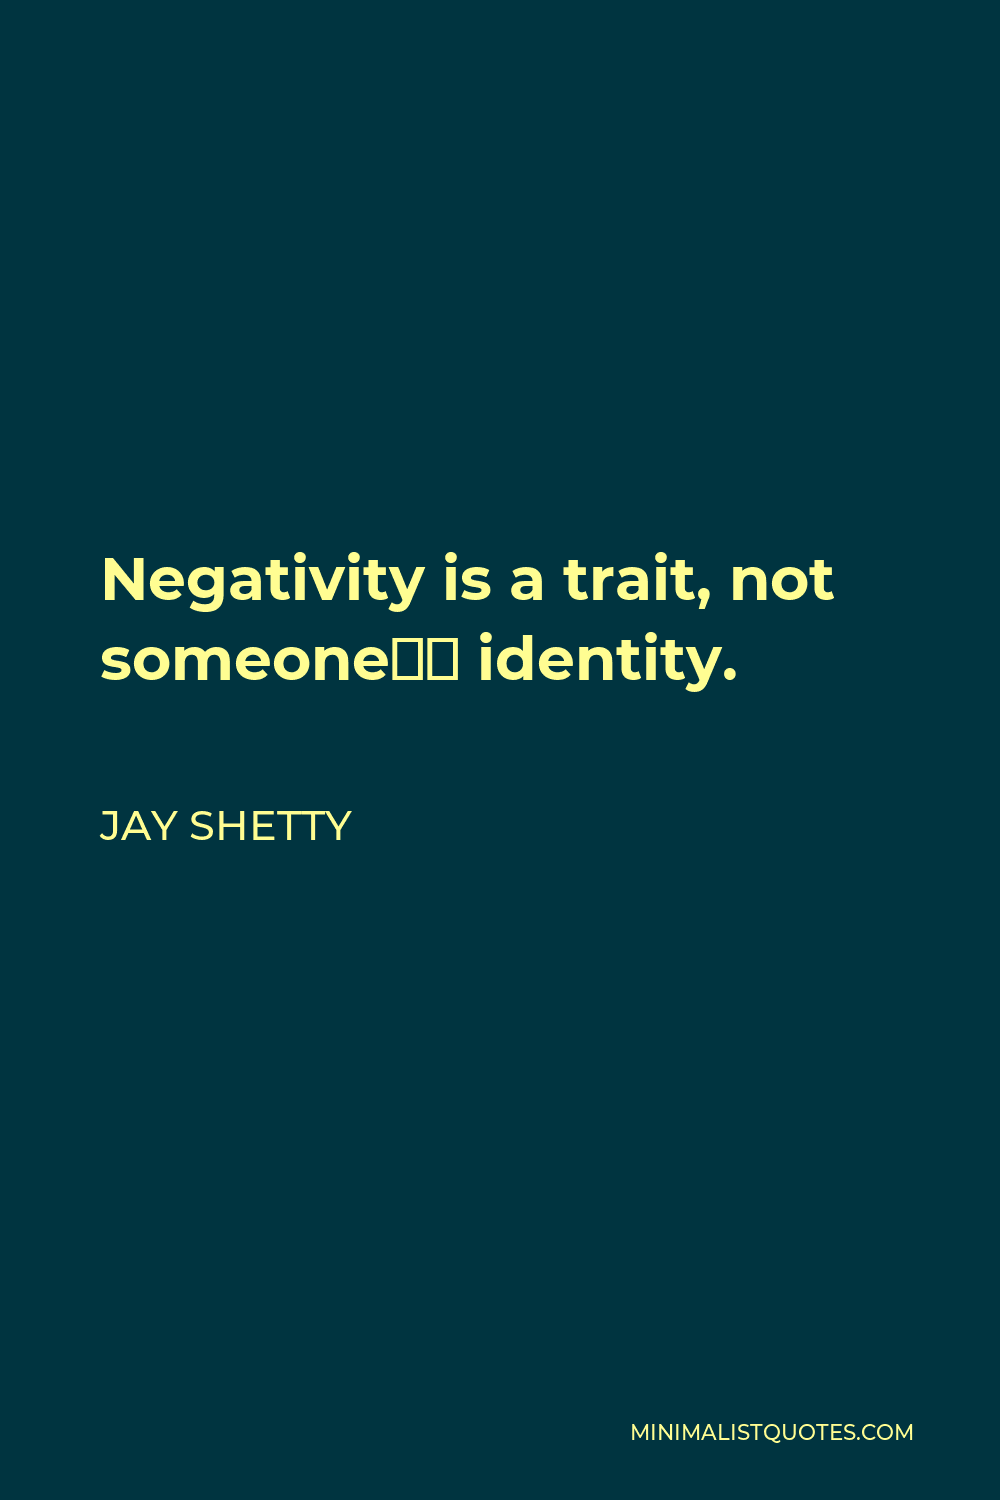 Jay Shetty Quote - Negativity is a trait, not someone’s identity.